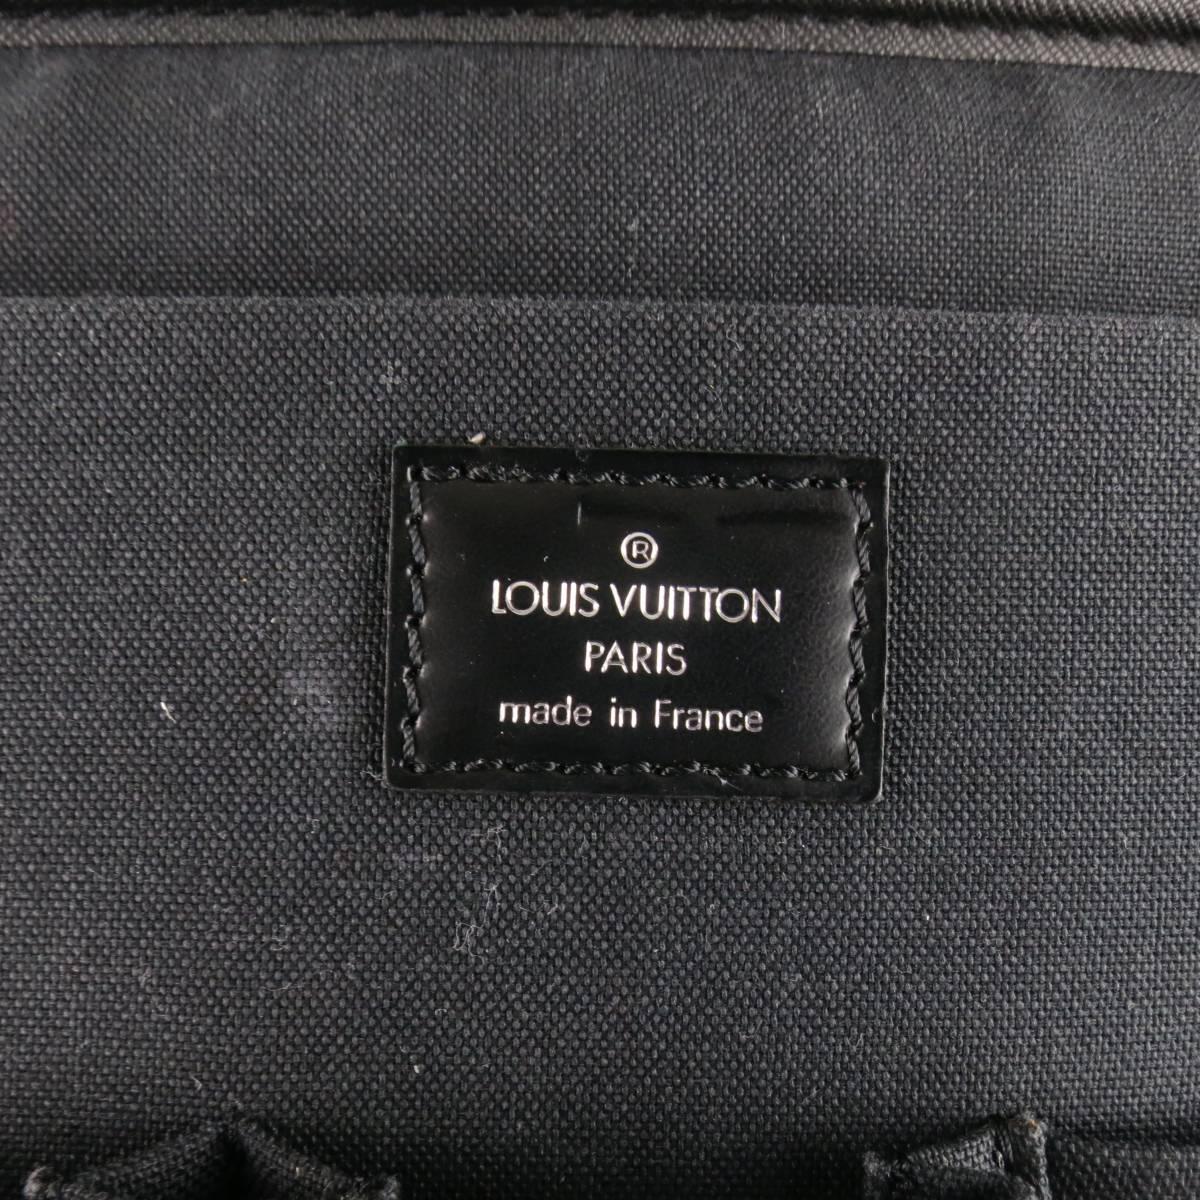 LOUIS VUITTON Briefcase - Black Leather ODESSA ARDOISE Computer LV Bag 4